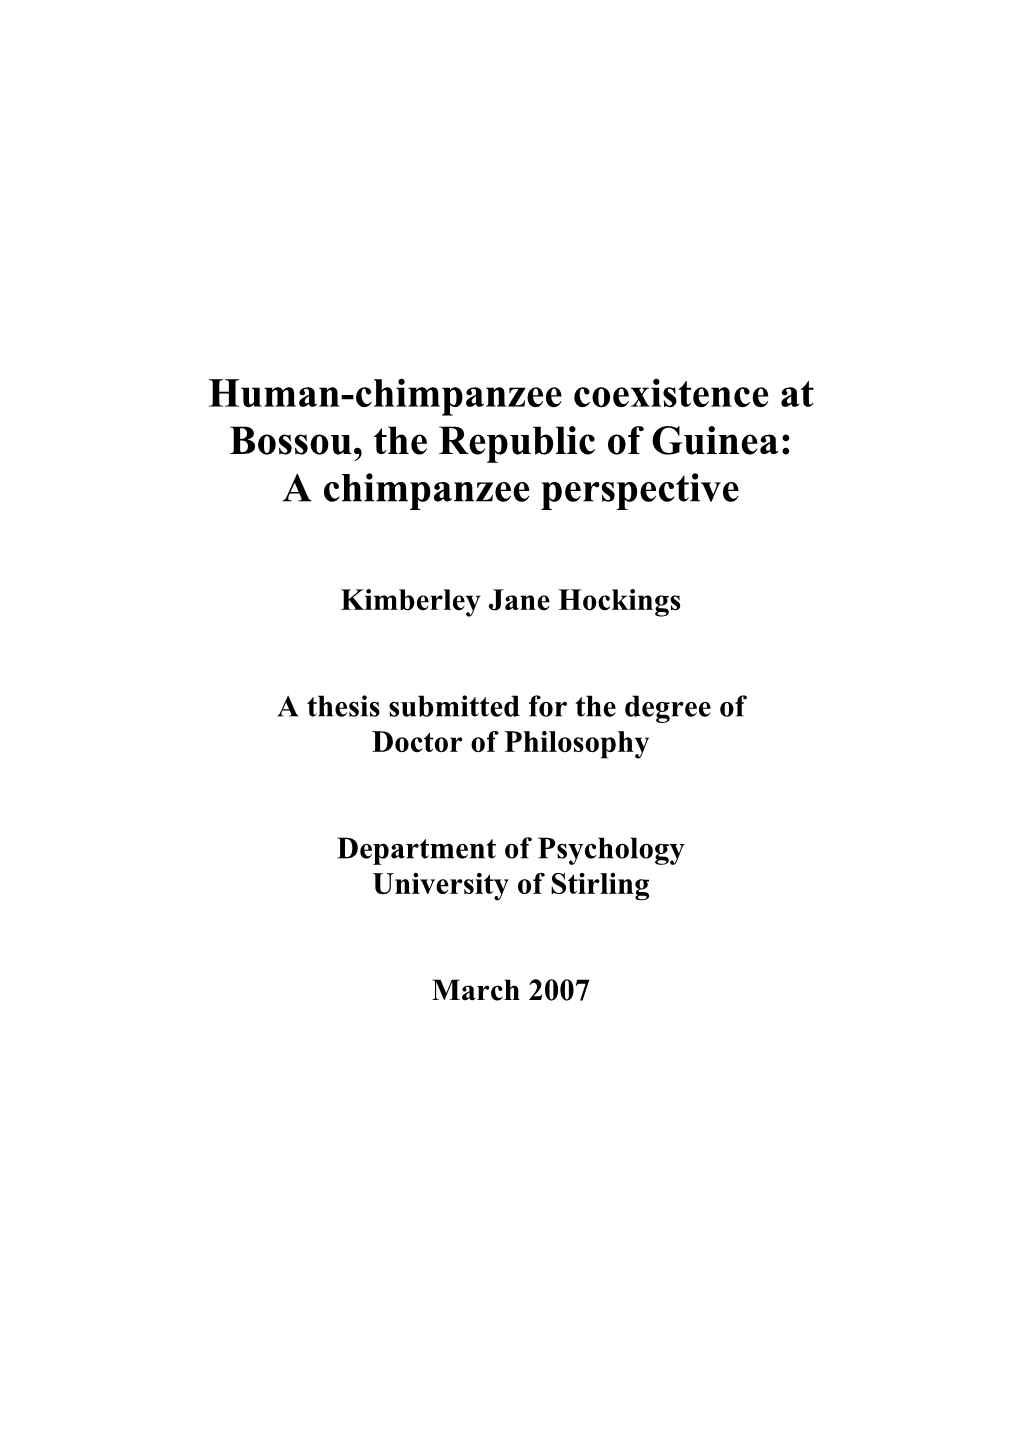 Human-Chimpanzee Coexistence at Bossou, the Republic of Guinea: a Chimpanzee Perspective